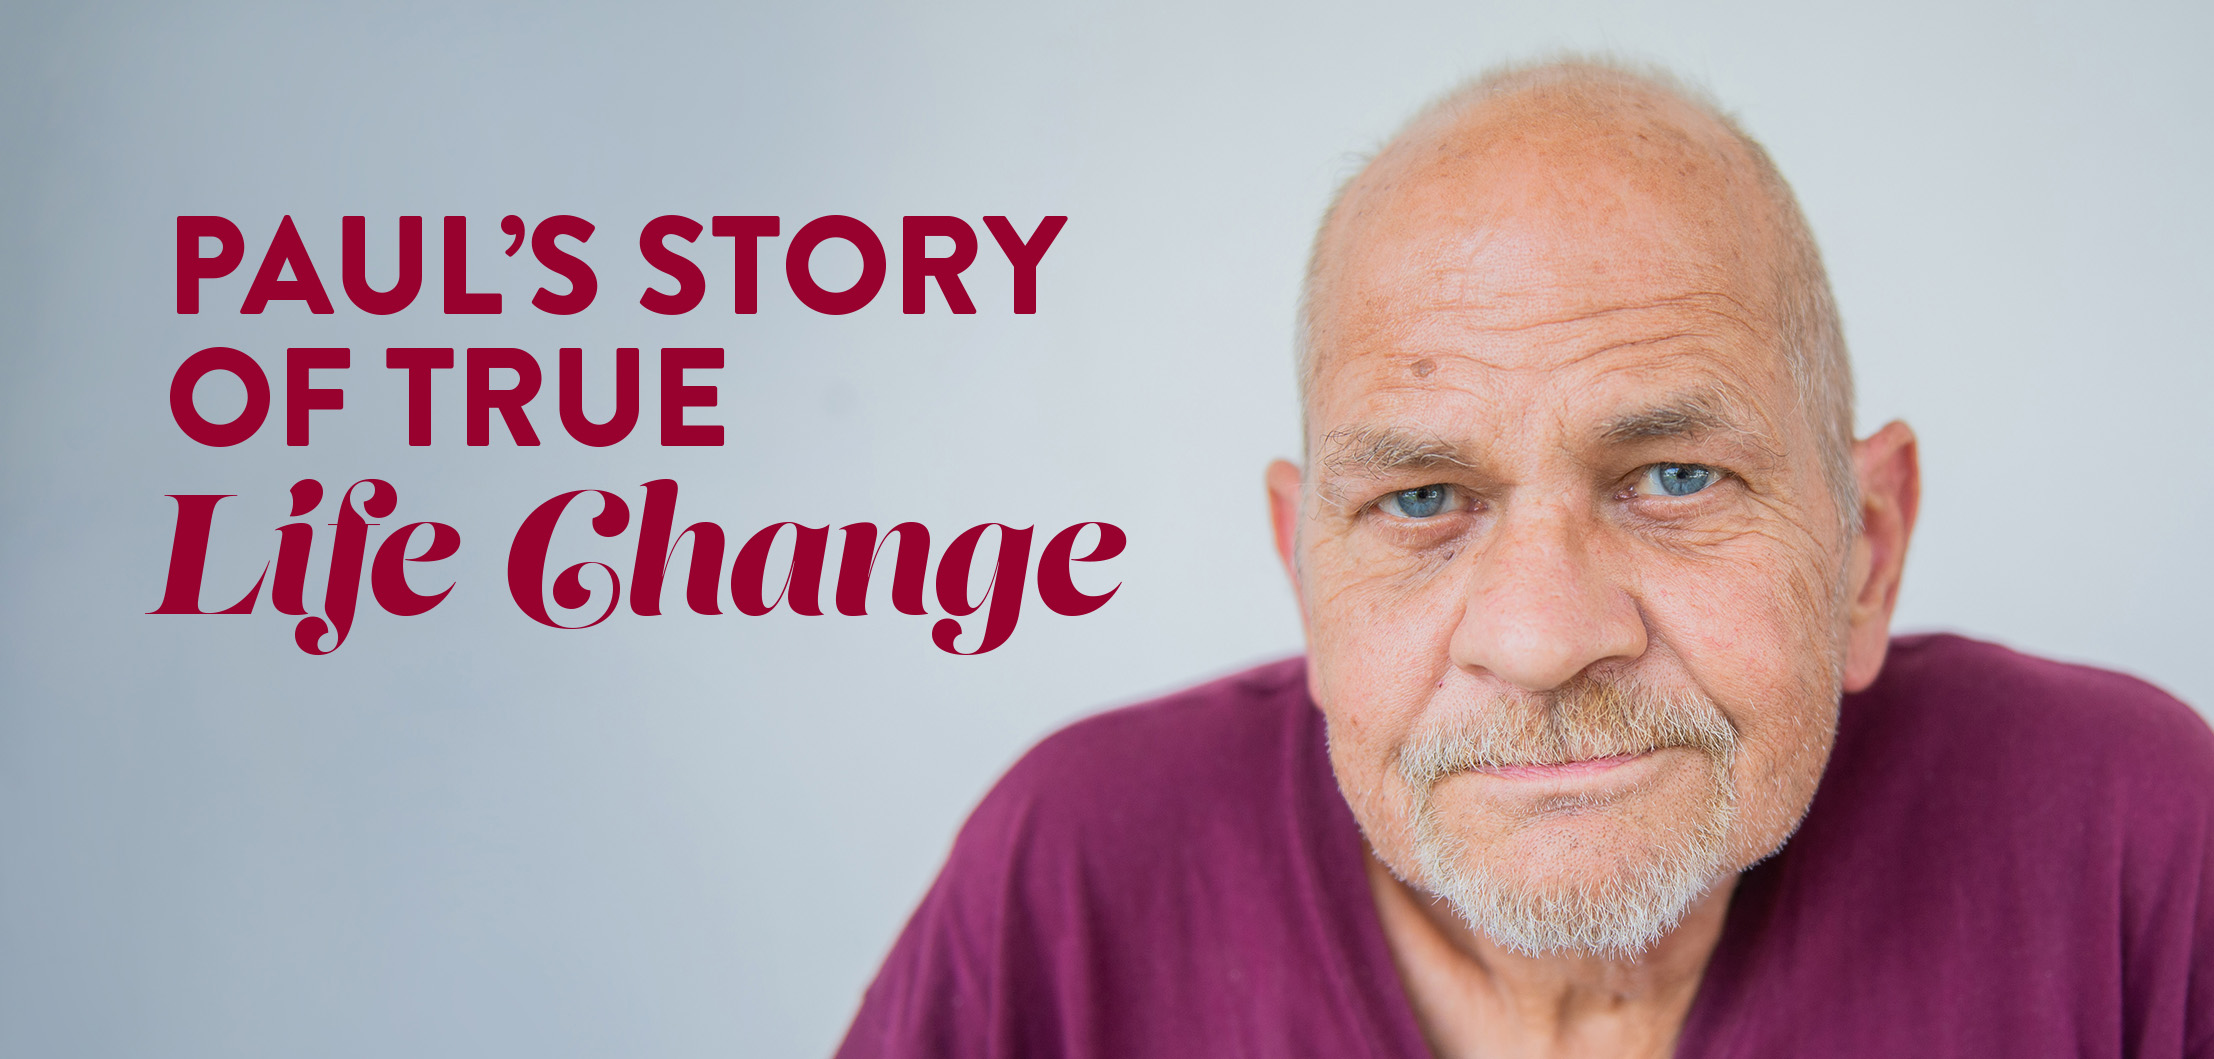 Paul's Story of True Life Change